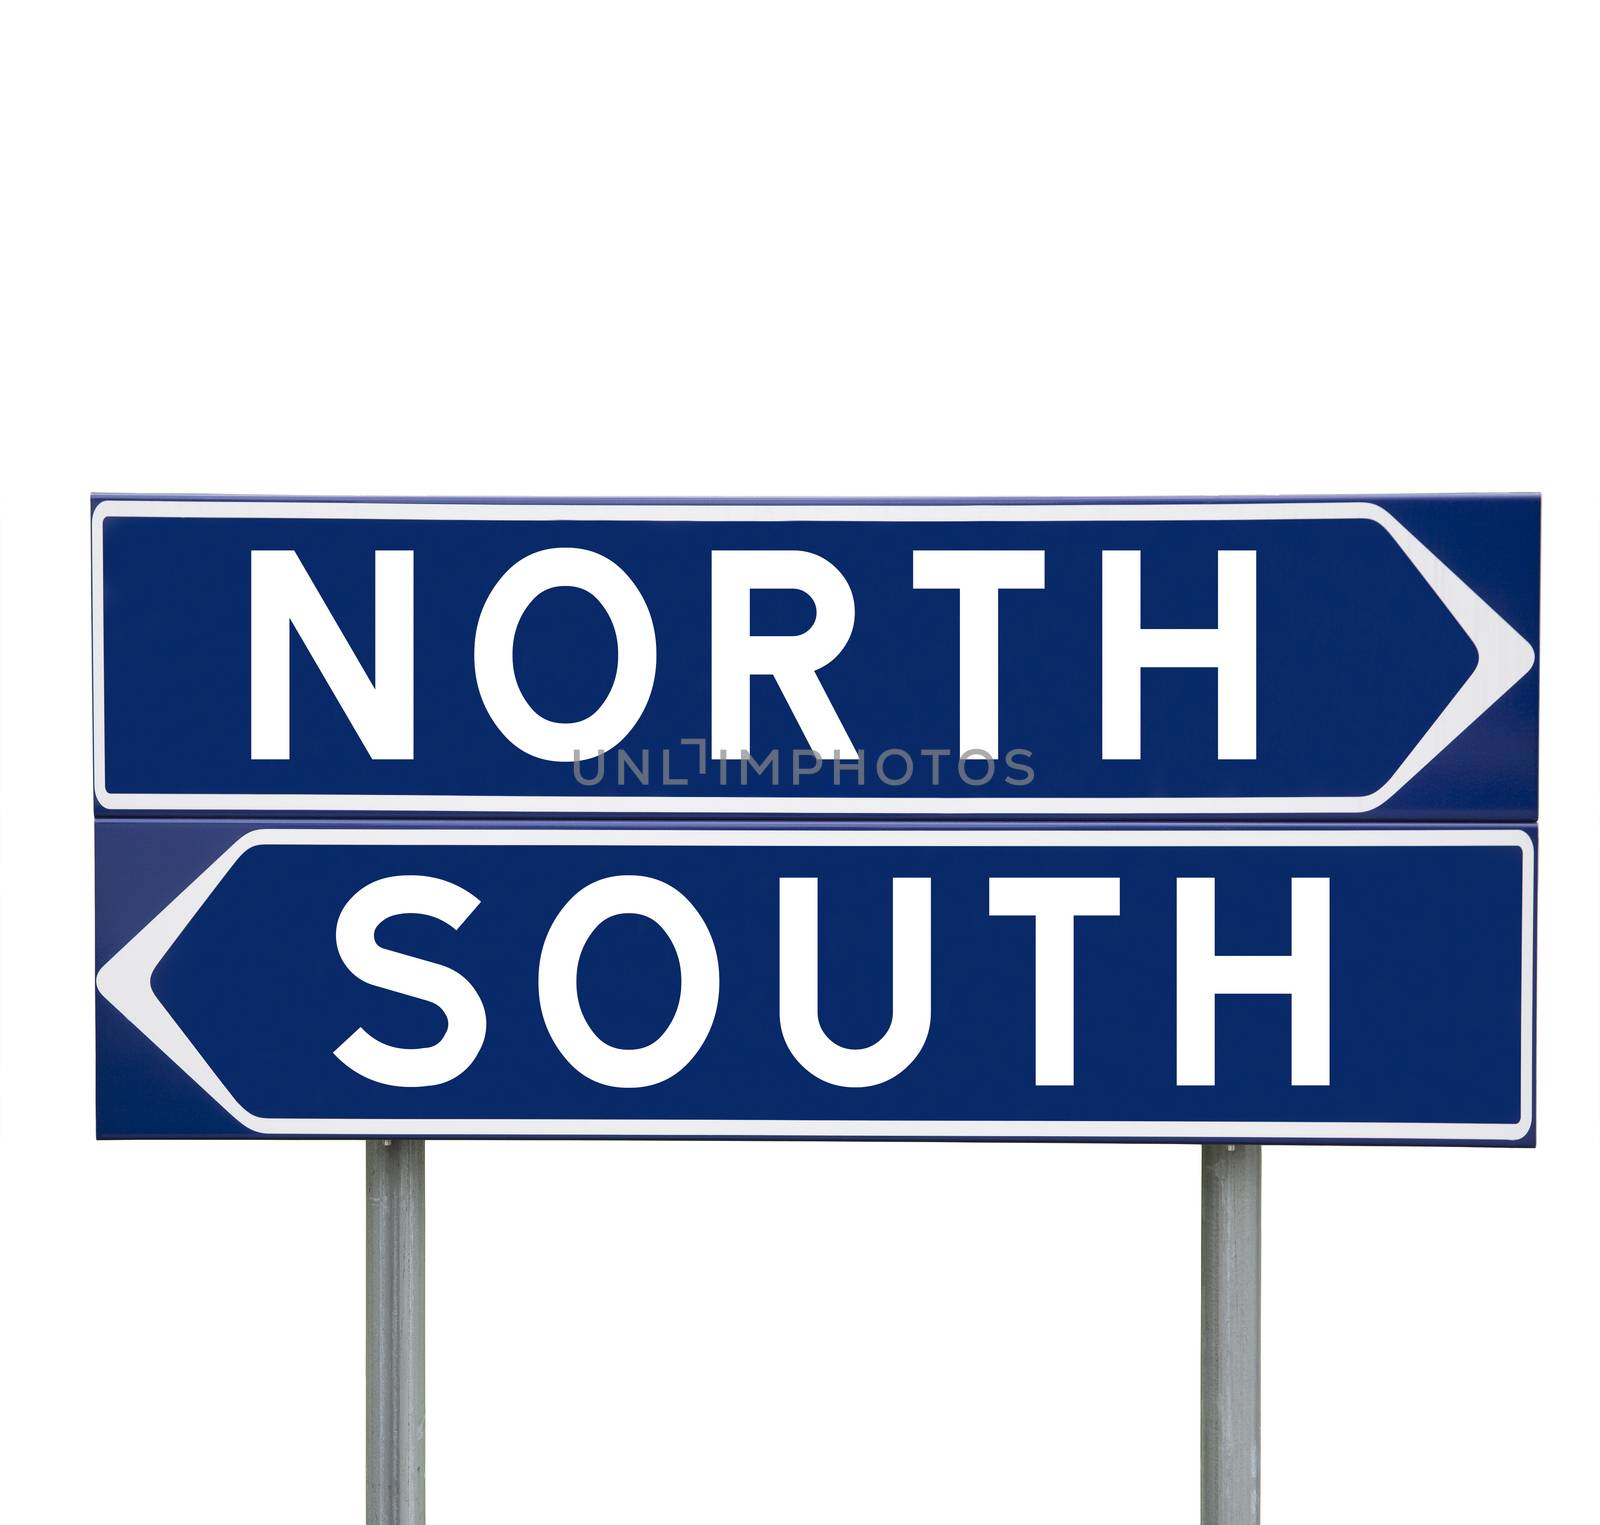 North or South by gemenacom